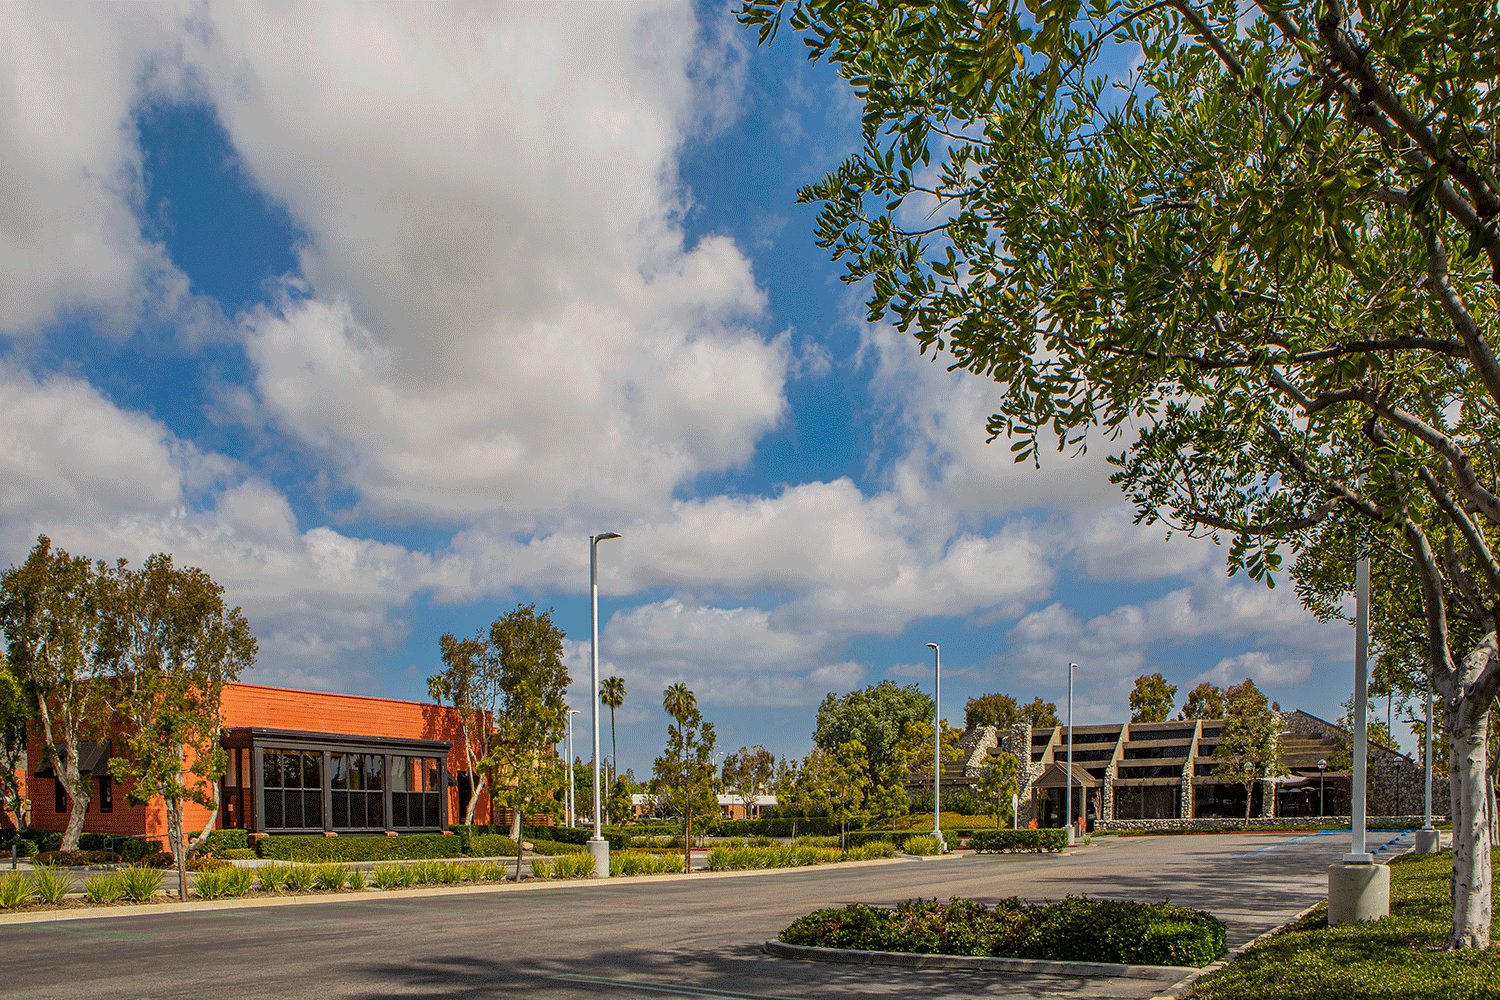  Exterior view of Venture Park